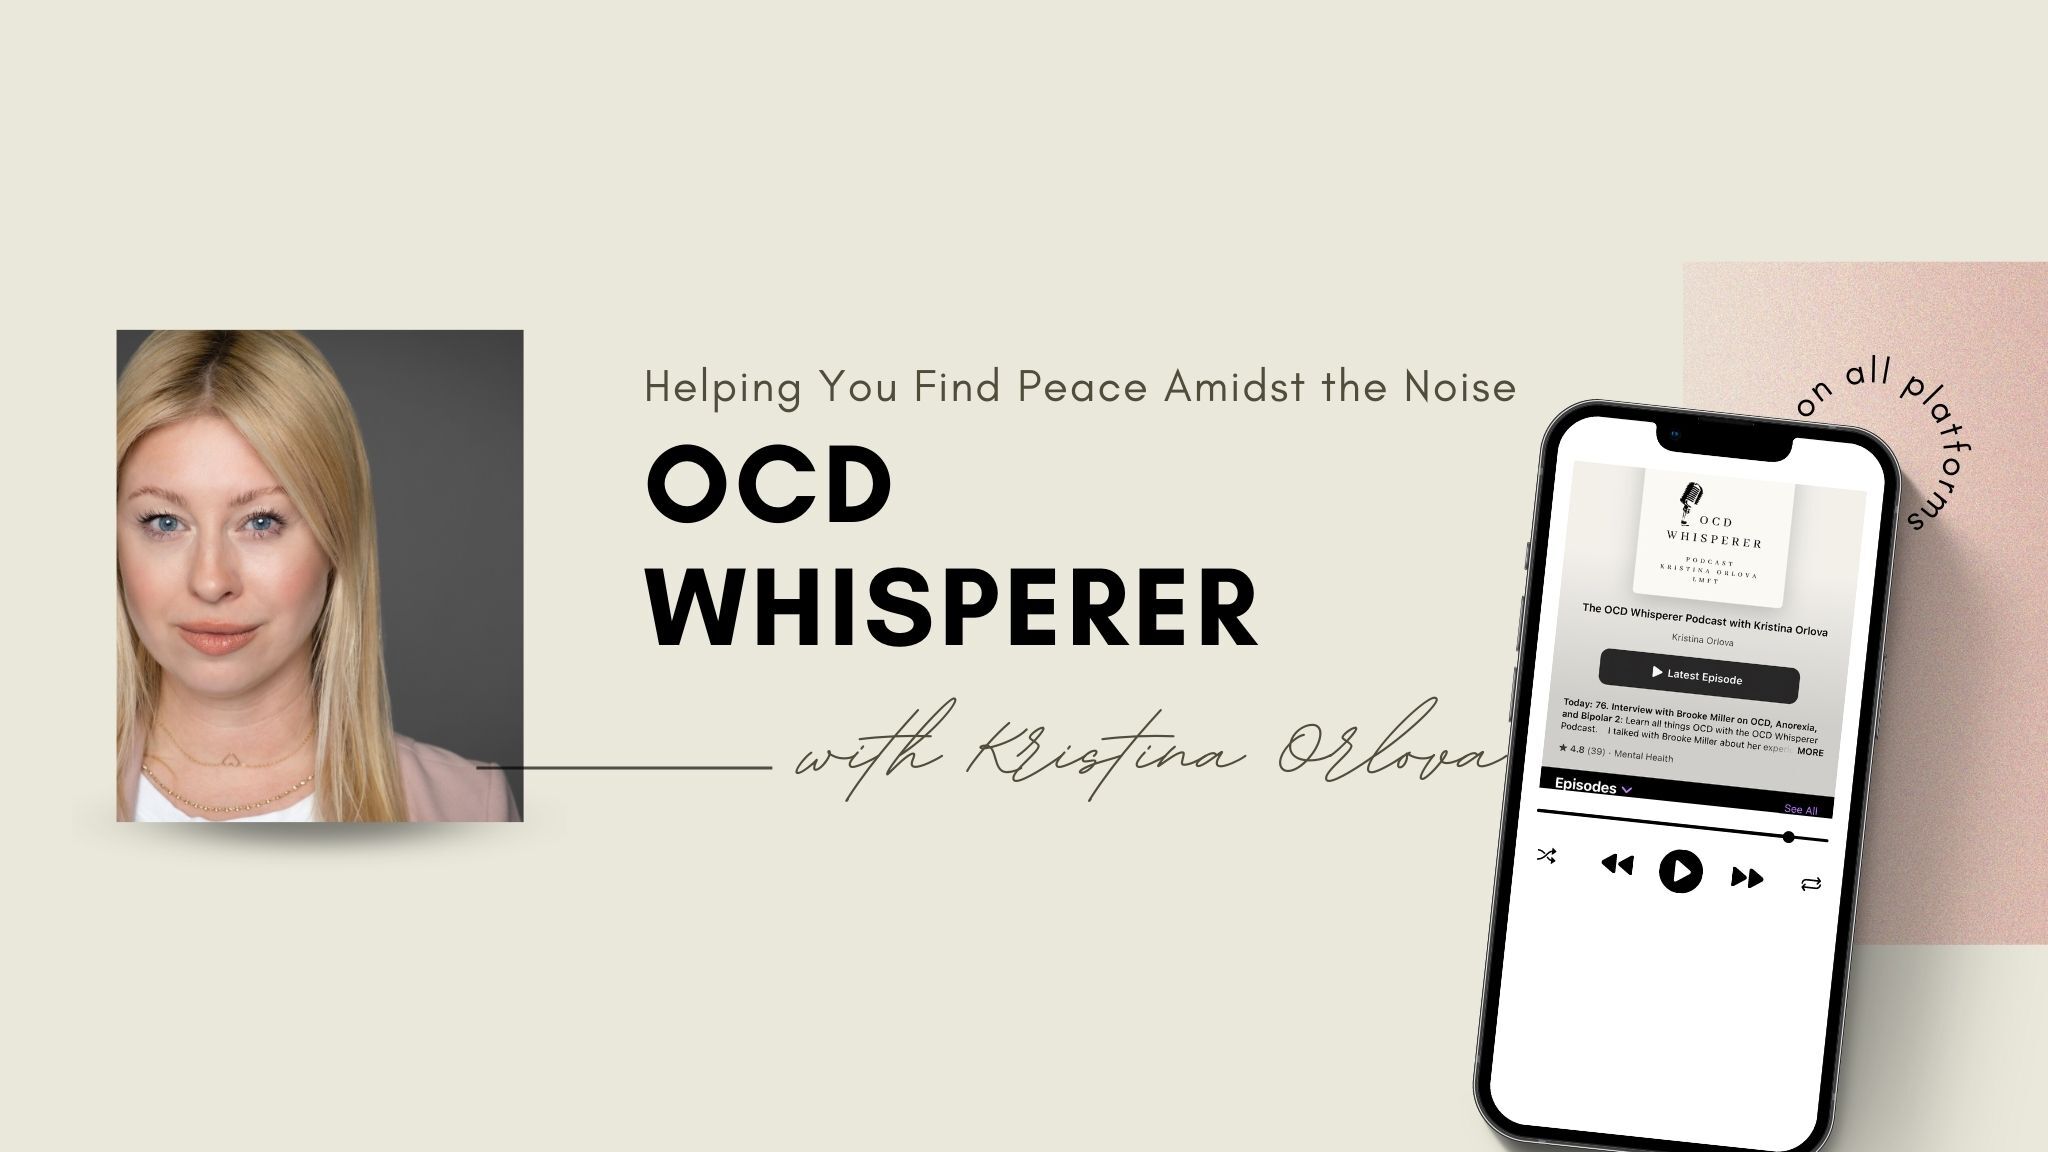 The OCD Whisperer Podcast with Kristina Orlova